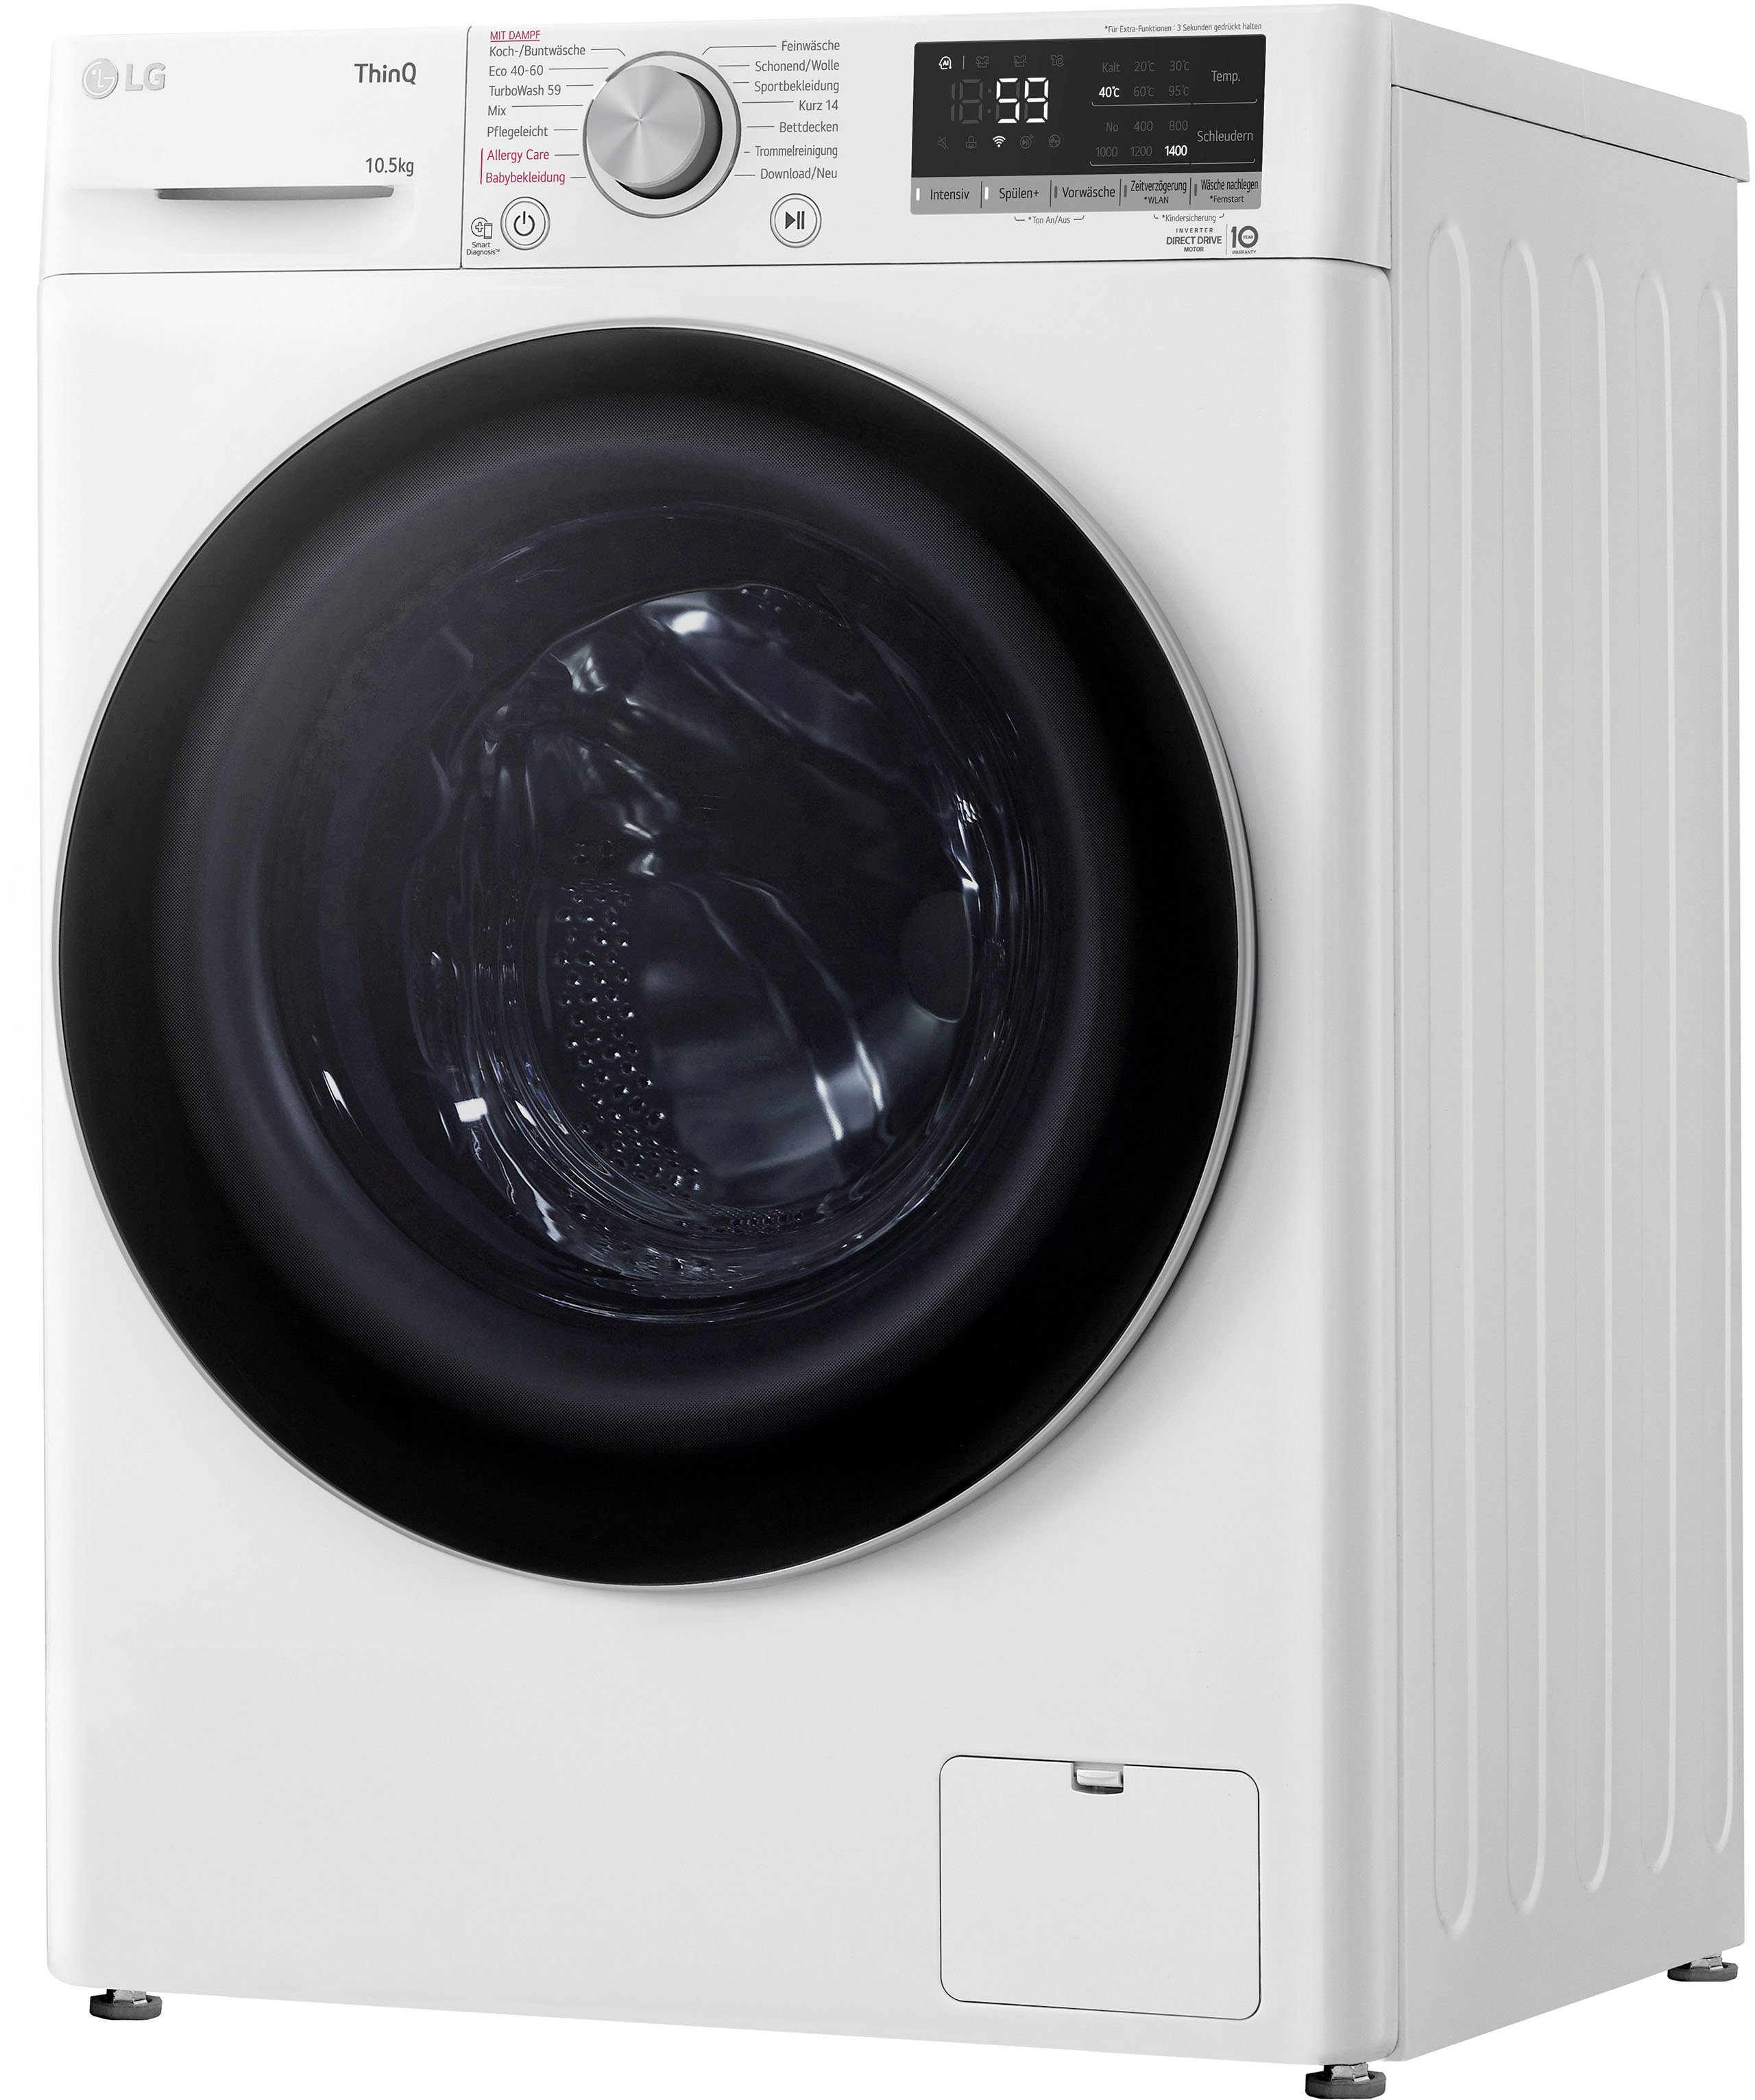 LG F4WV70X1, kg, Waschmaschine 10,5 U/min 1400